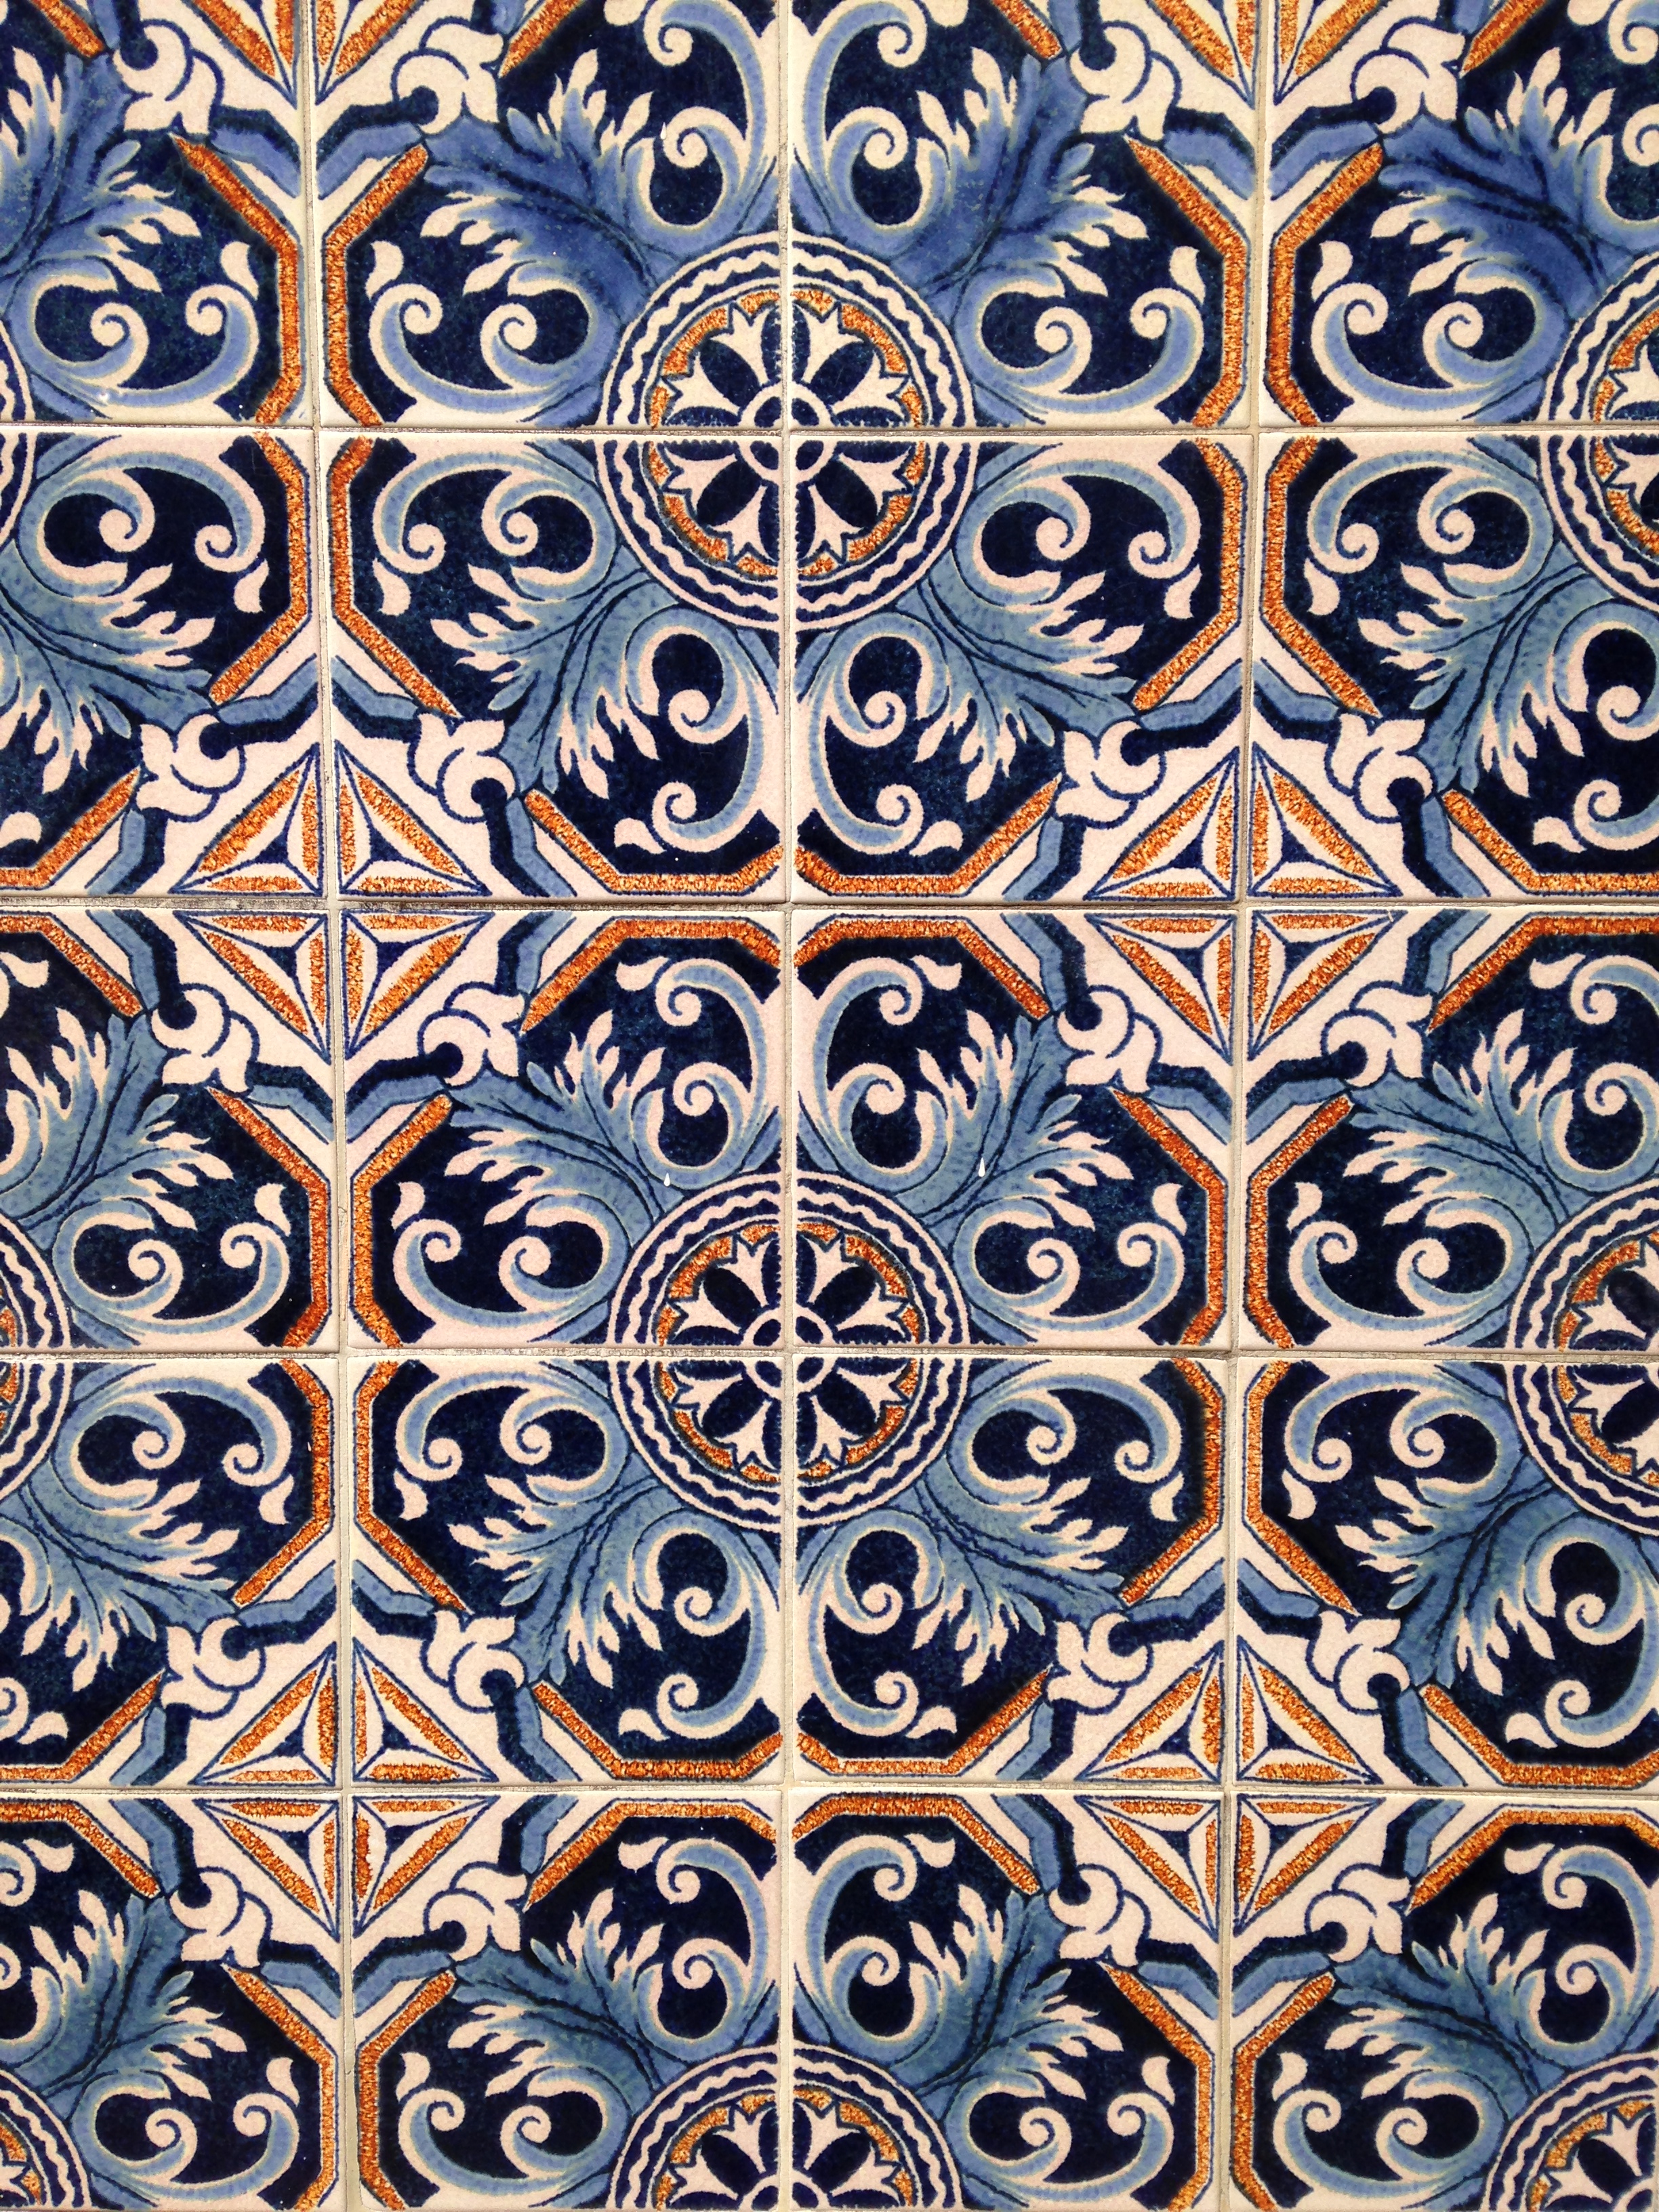 Portuguese Tiles Wallpaper For Your iPhone Kittenhood